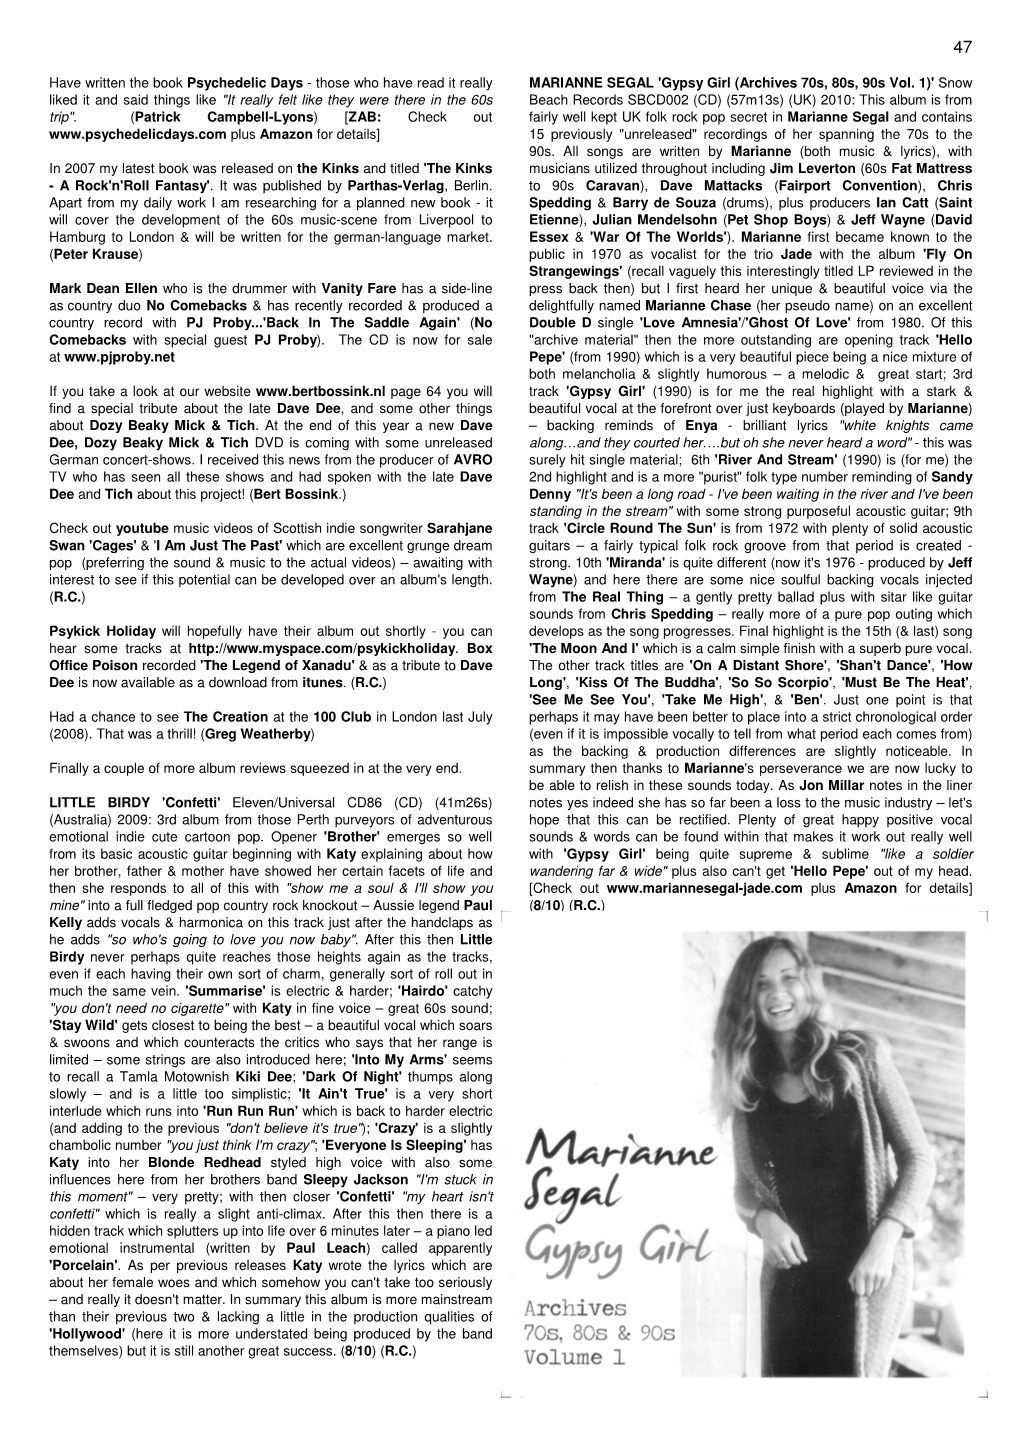 Review from Zabadak Magazine, Issue 25